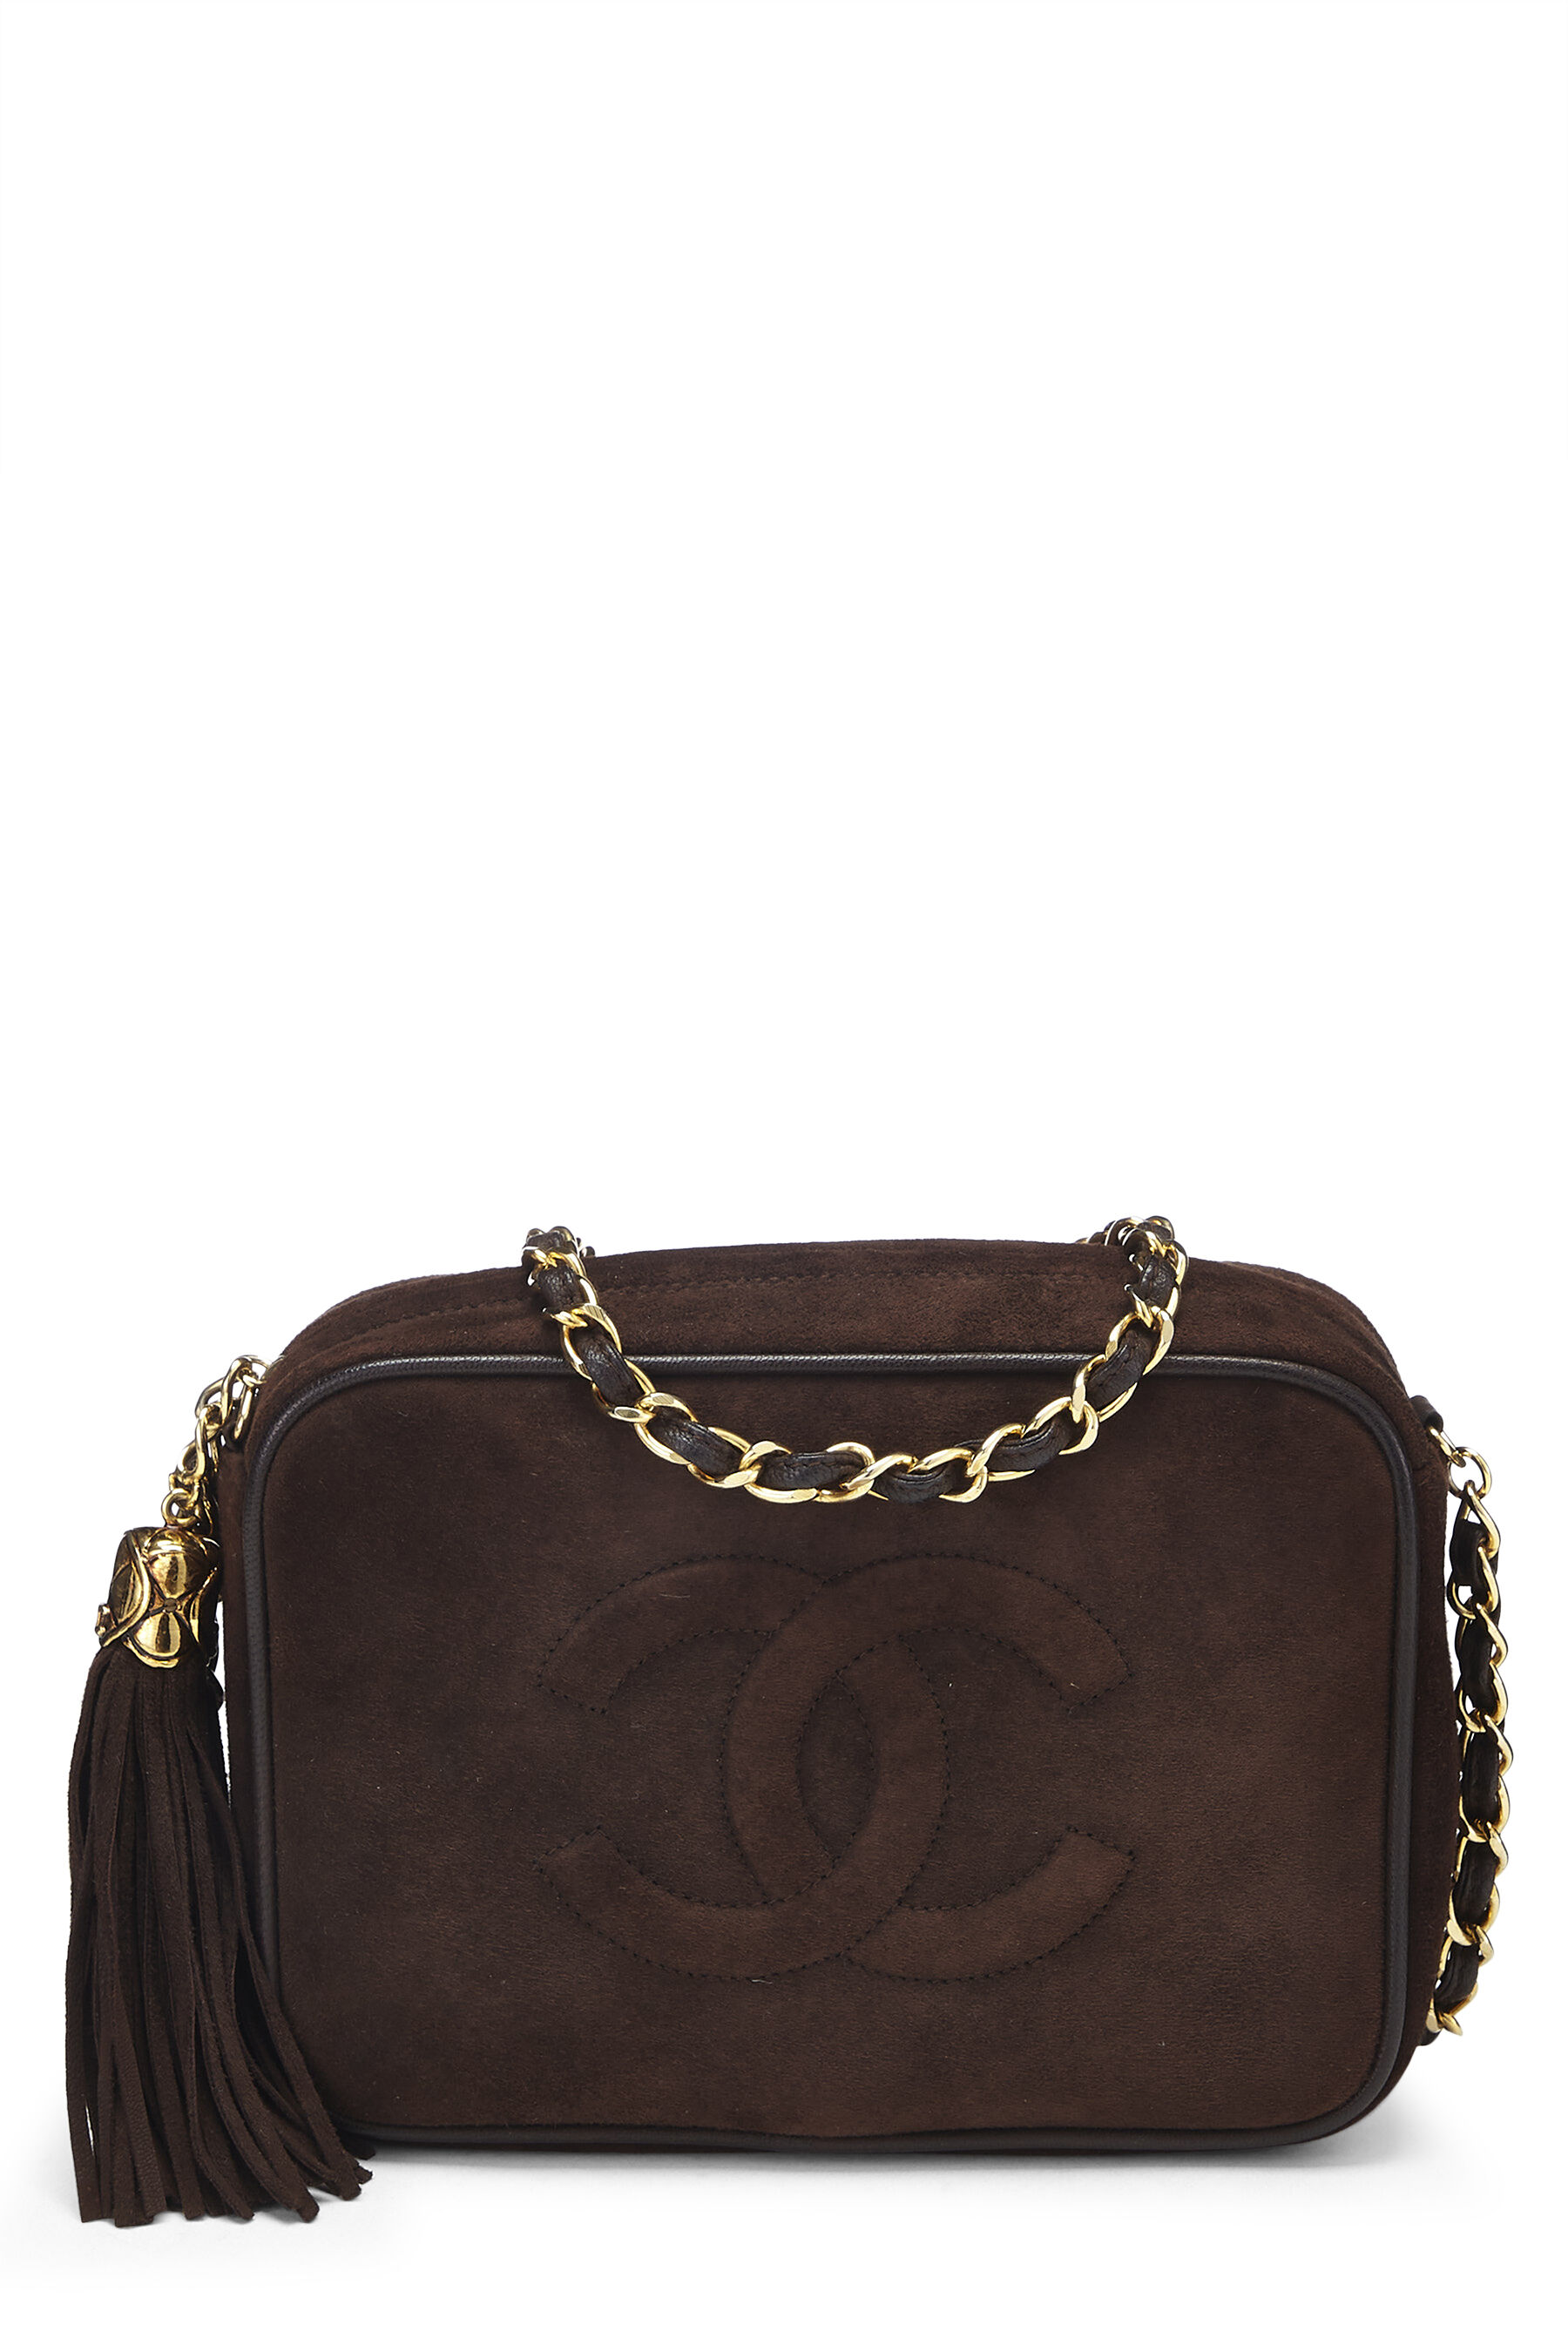 Chanel - Brown Suede Camera Bag Mini